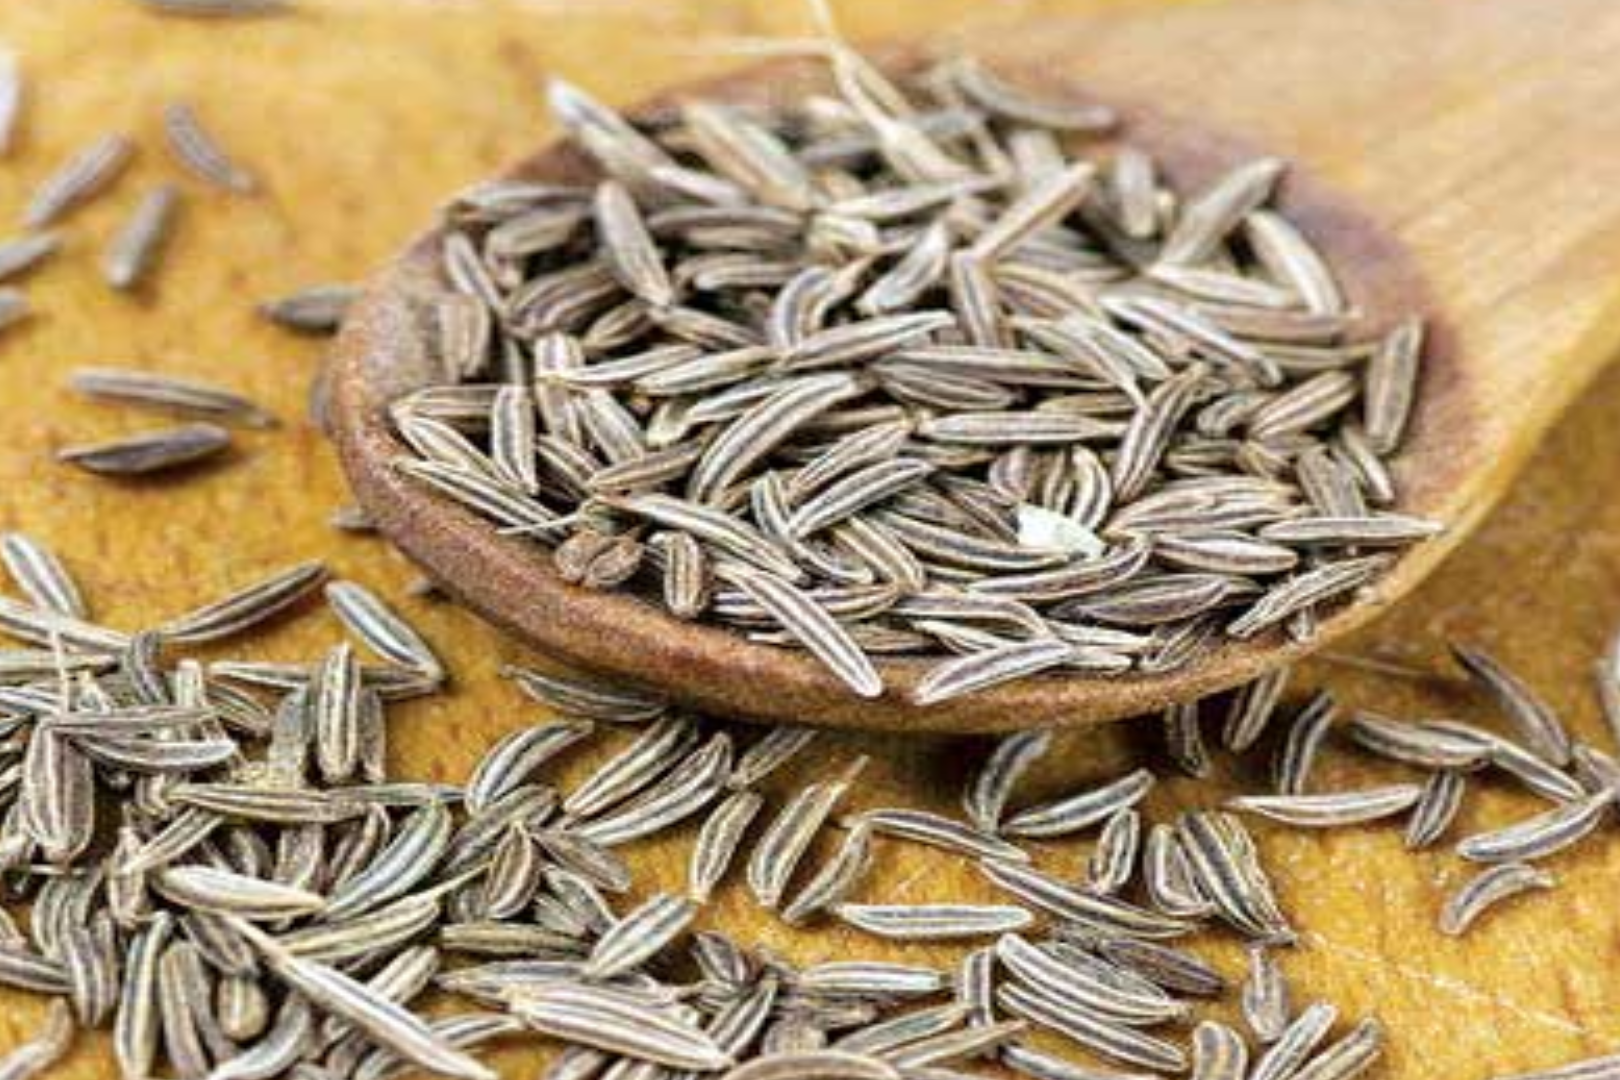 health benefits of biryani spices or biryani masala